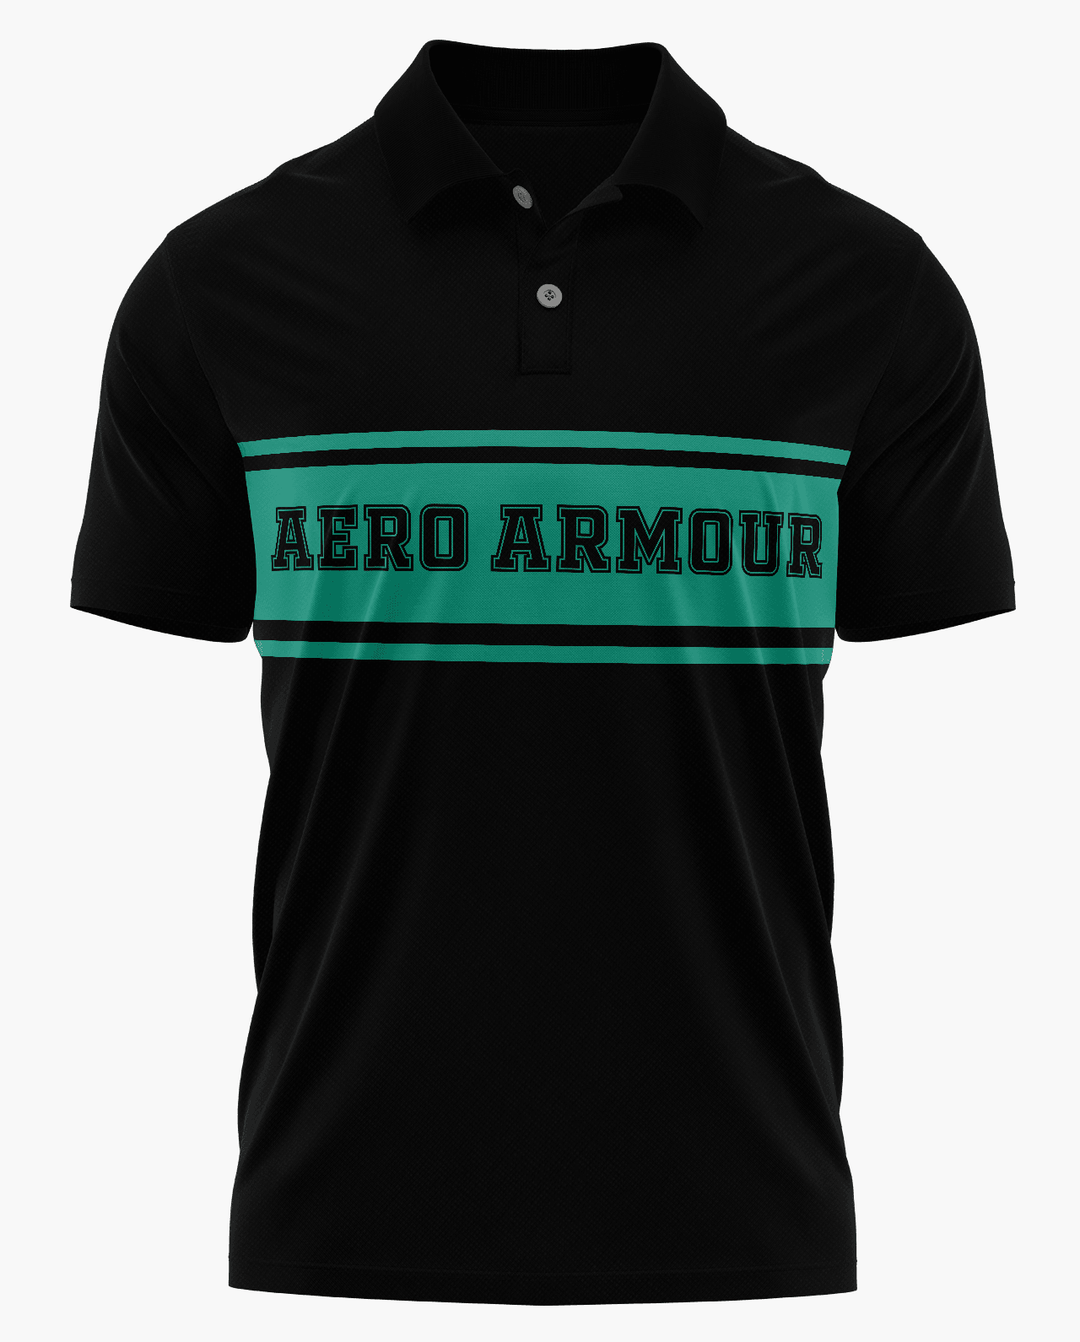 Aero Armour Retro Polo T-Shirt - Aero Armour